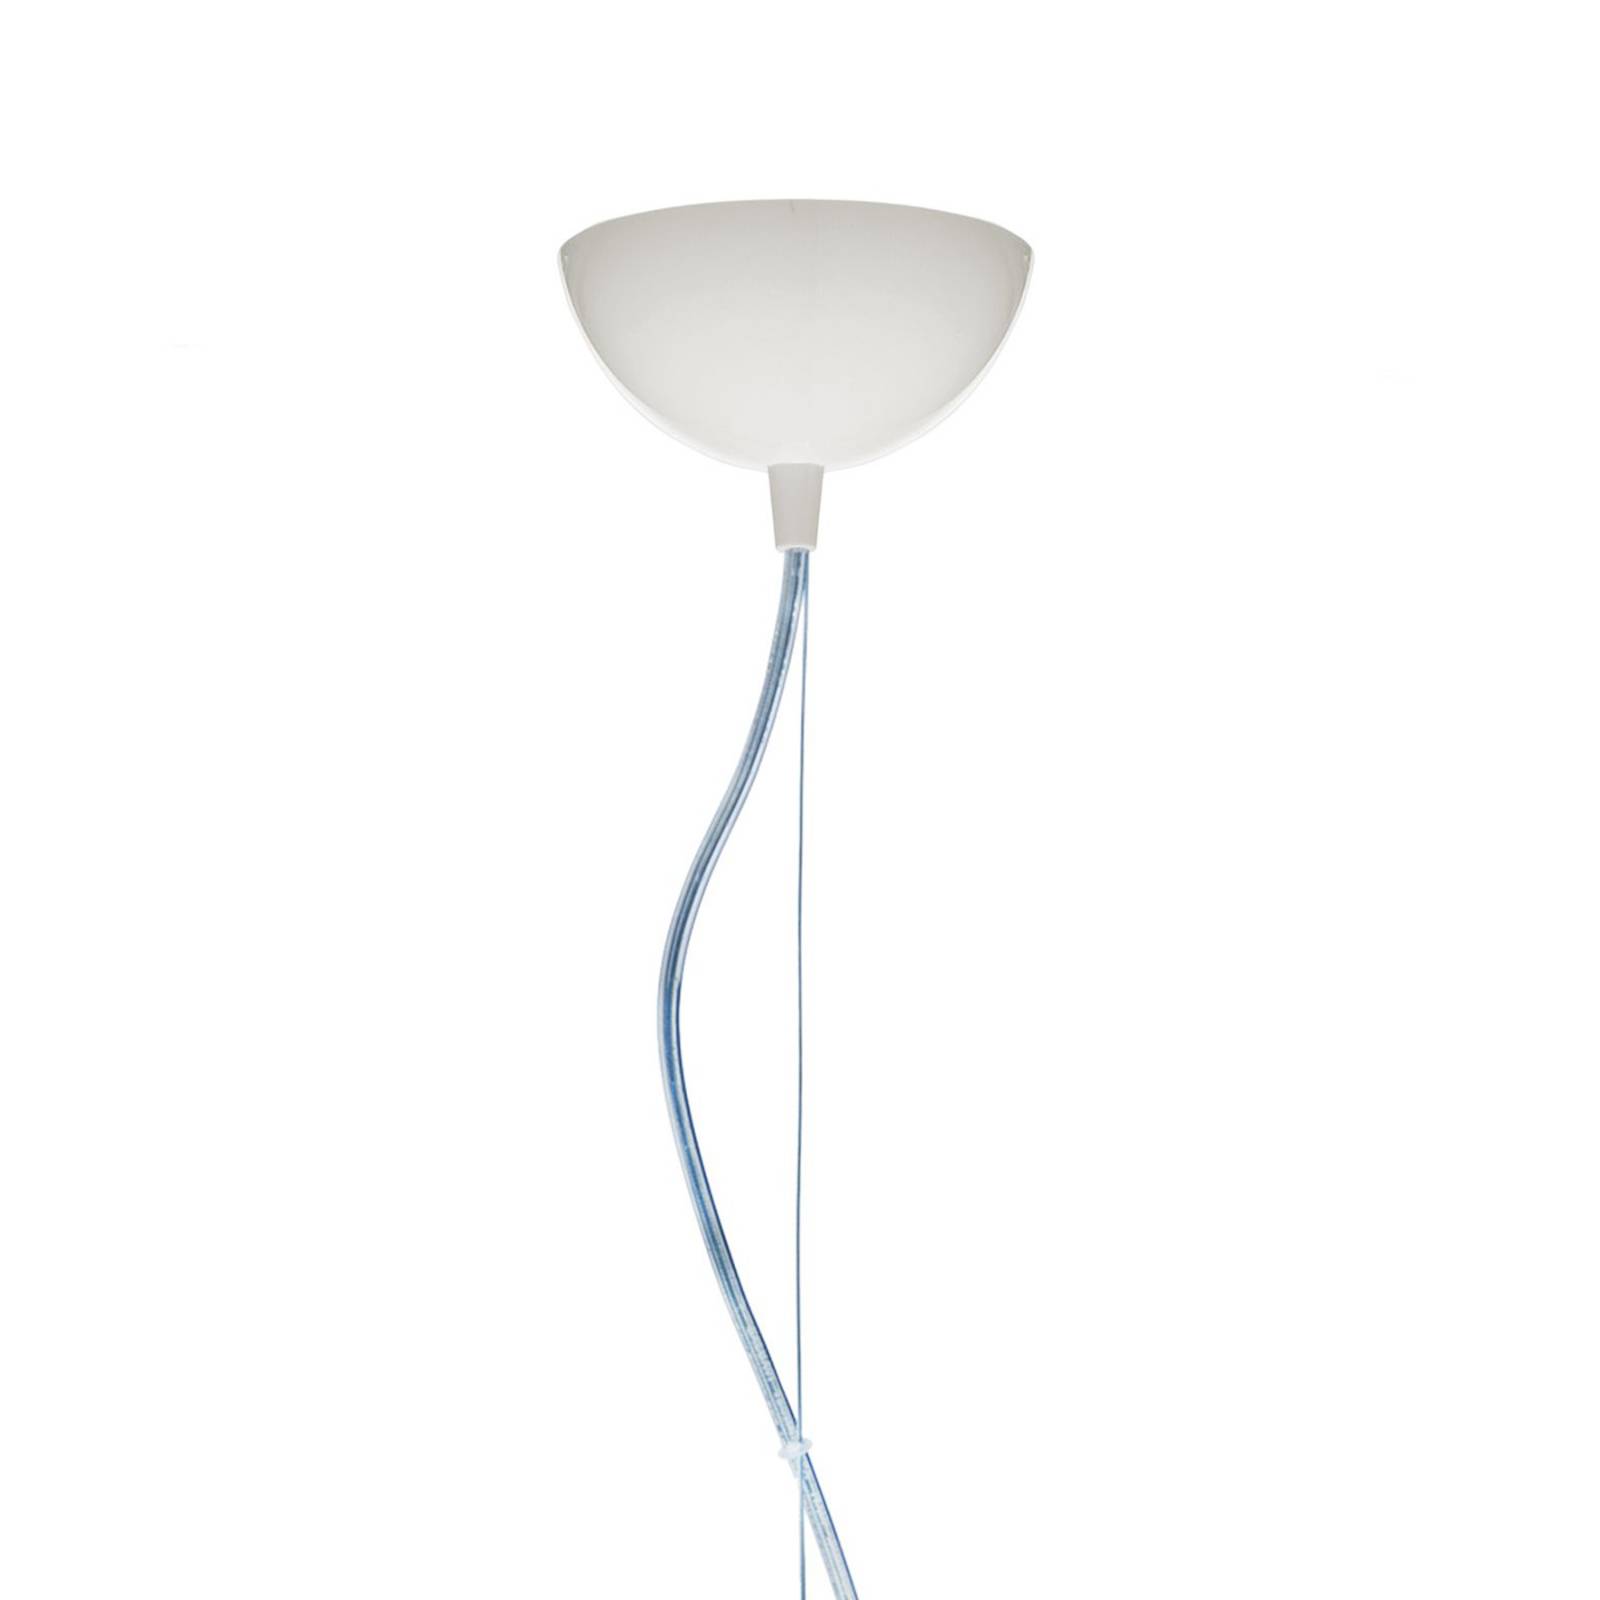 Kartell FL/Y - suspension LED, blanche mate